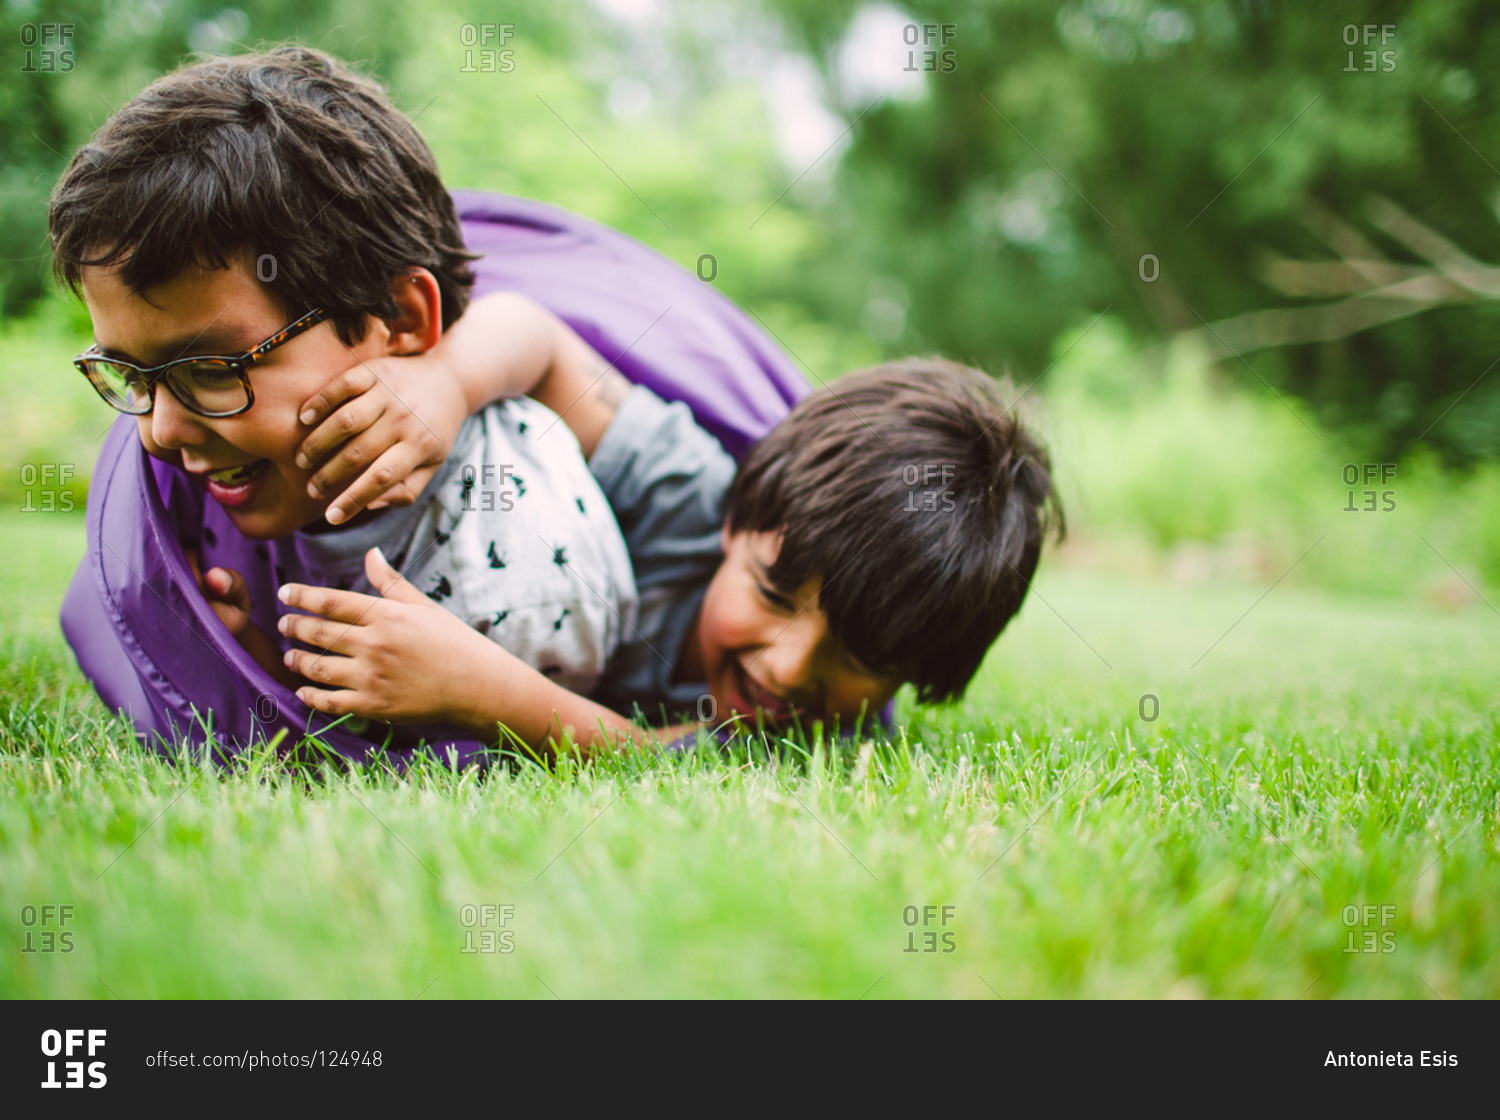 Boys wrestling in the grass